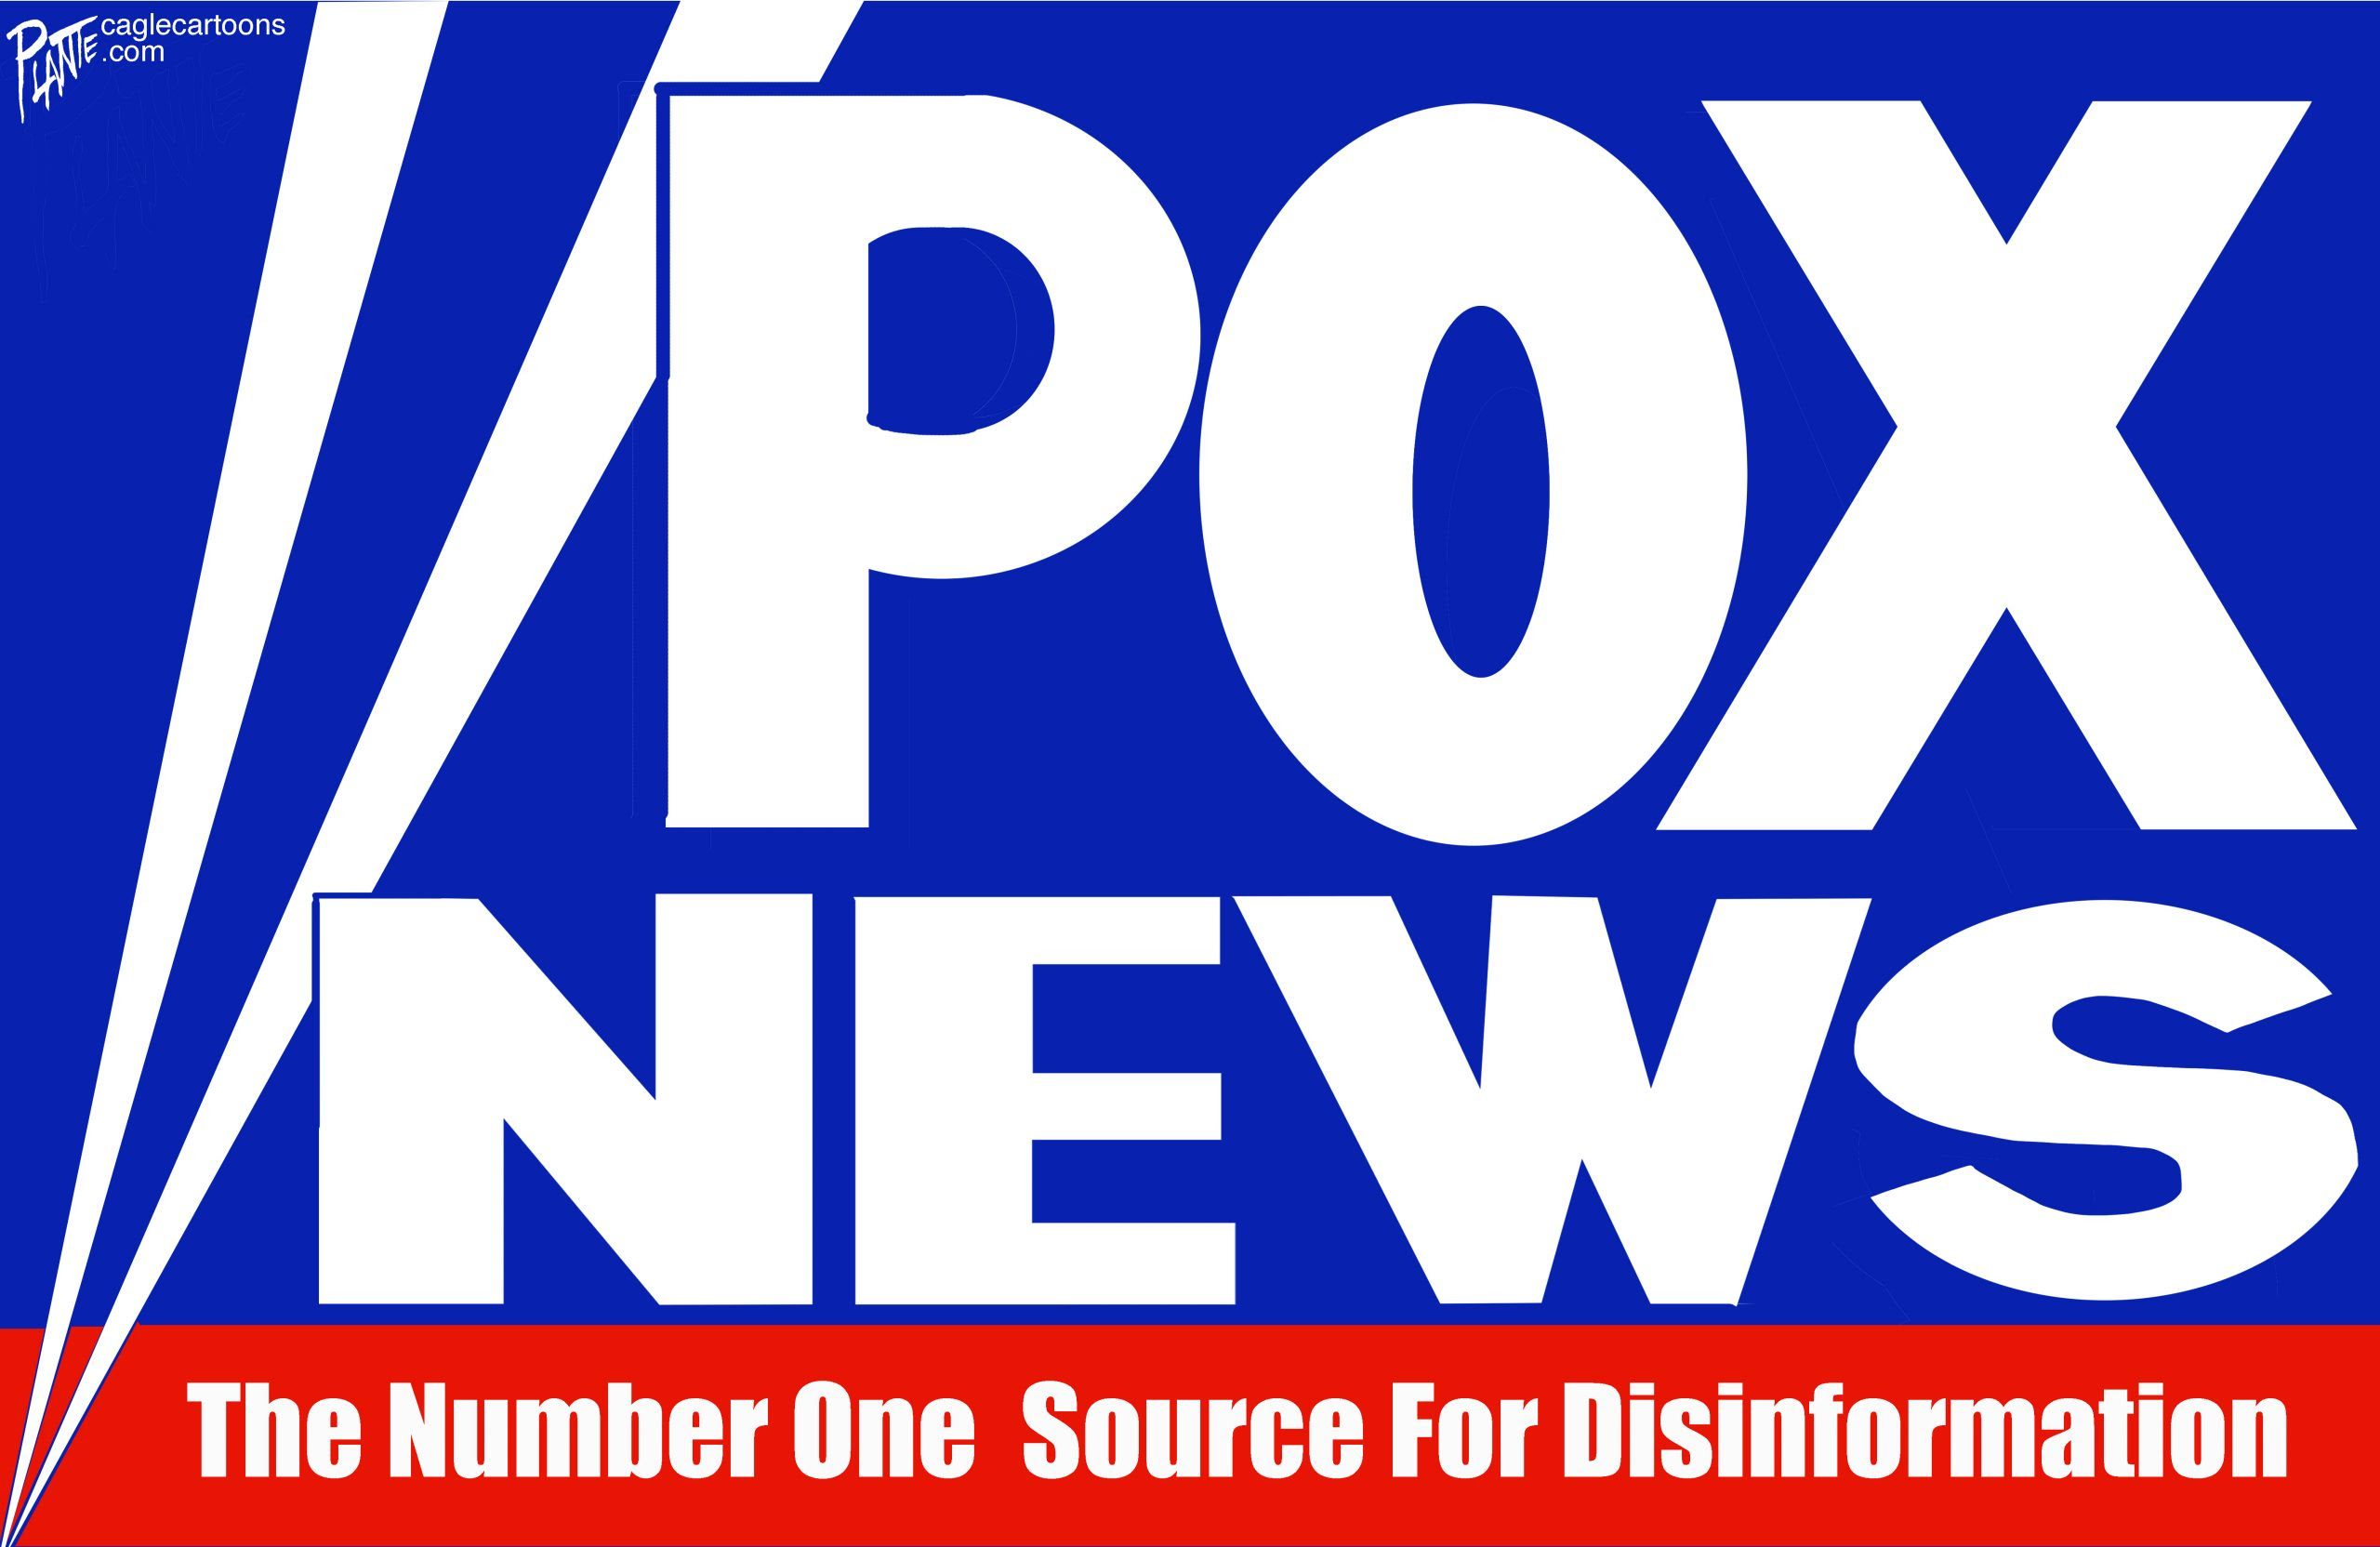 Fox News spreads disinformation and propaganda